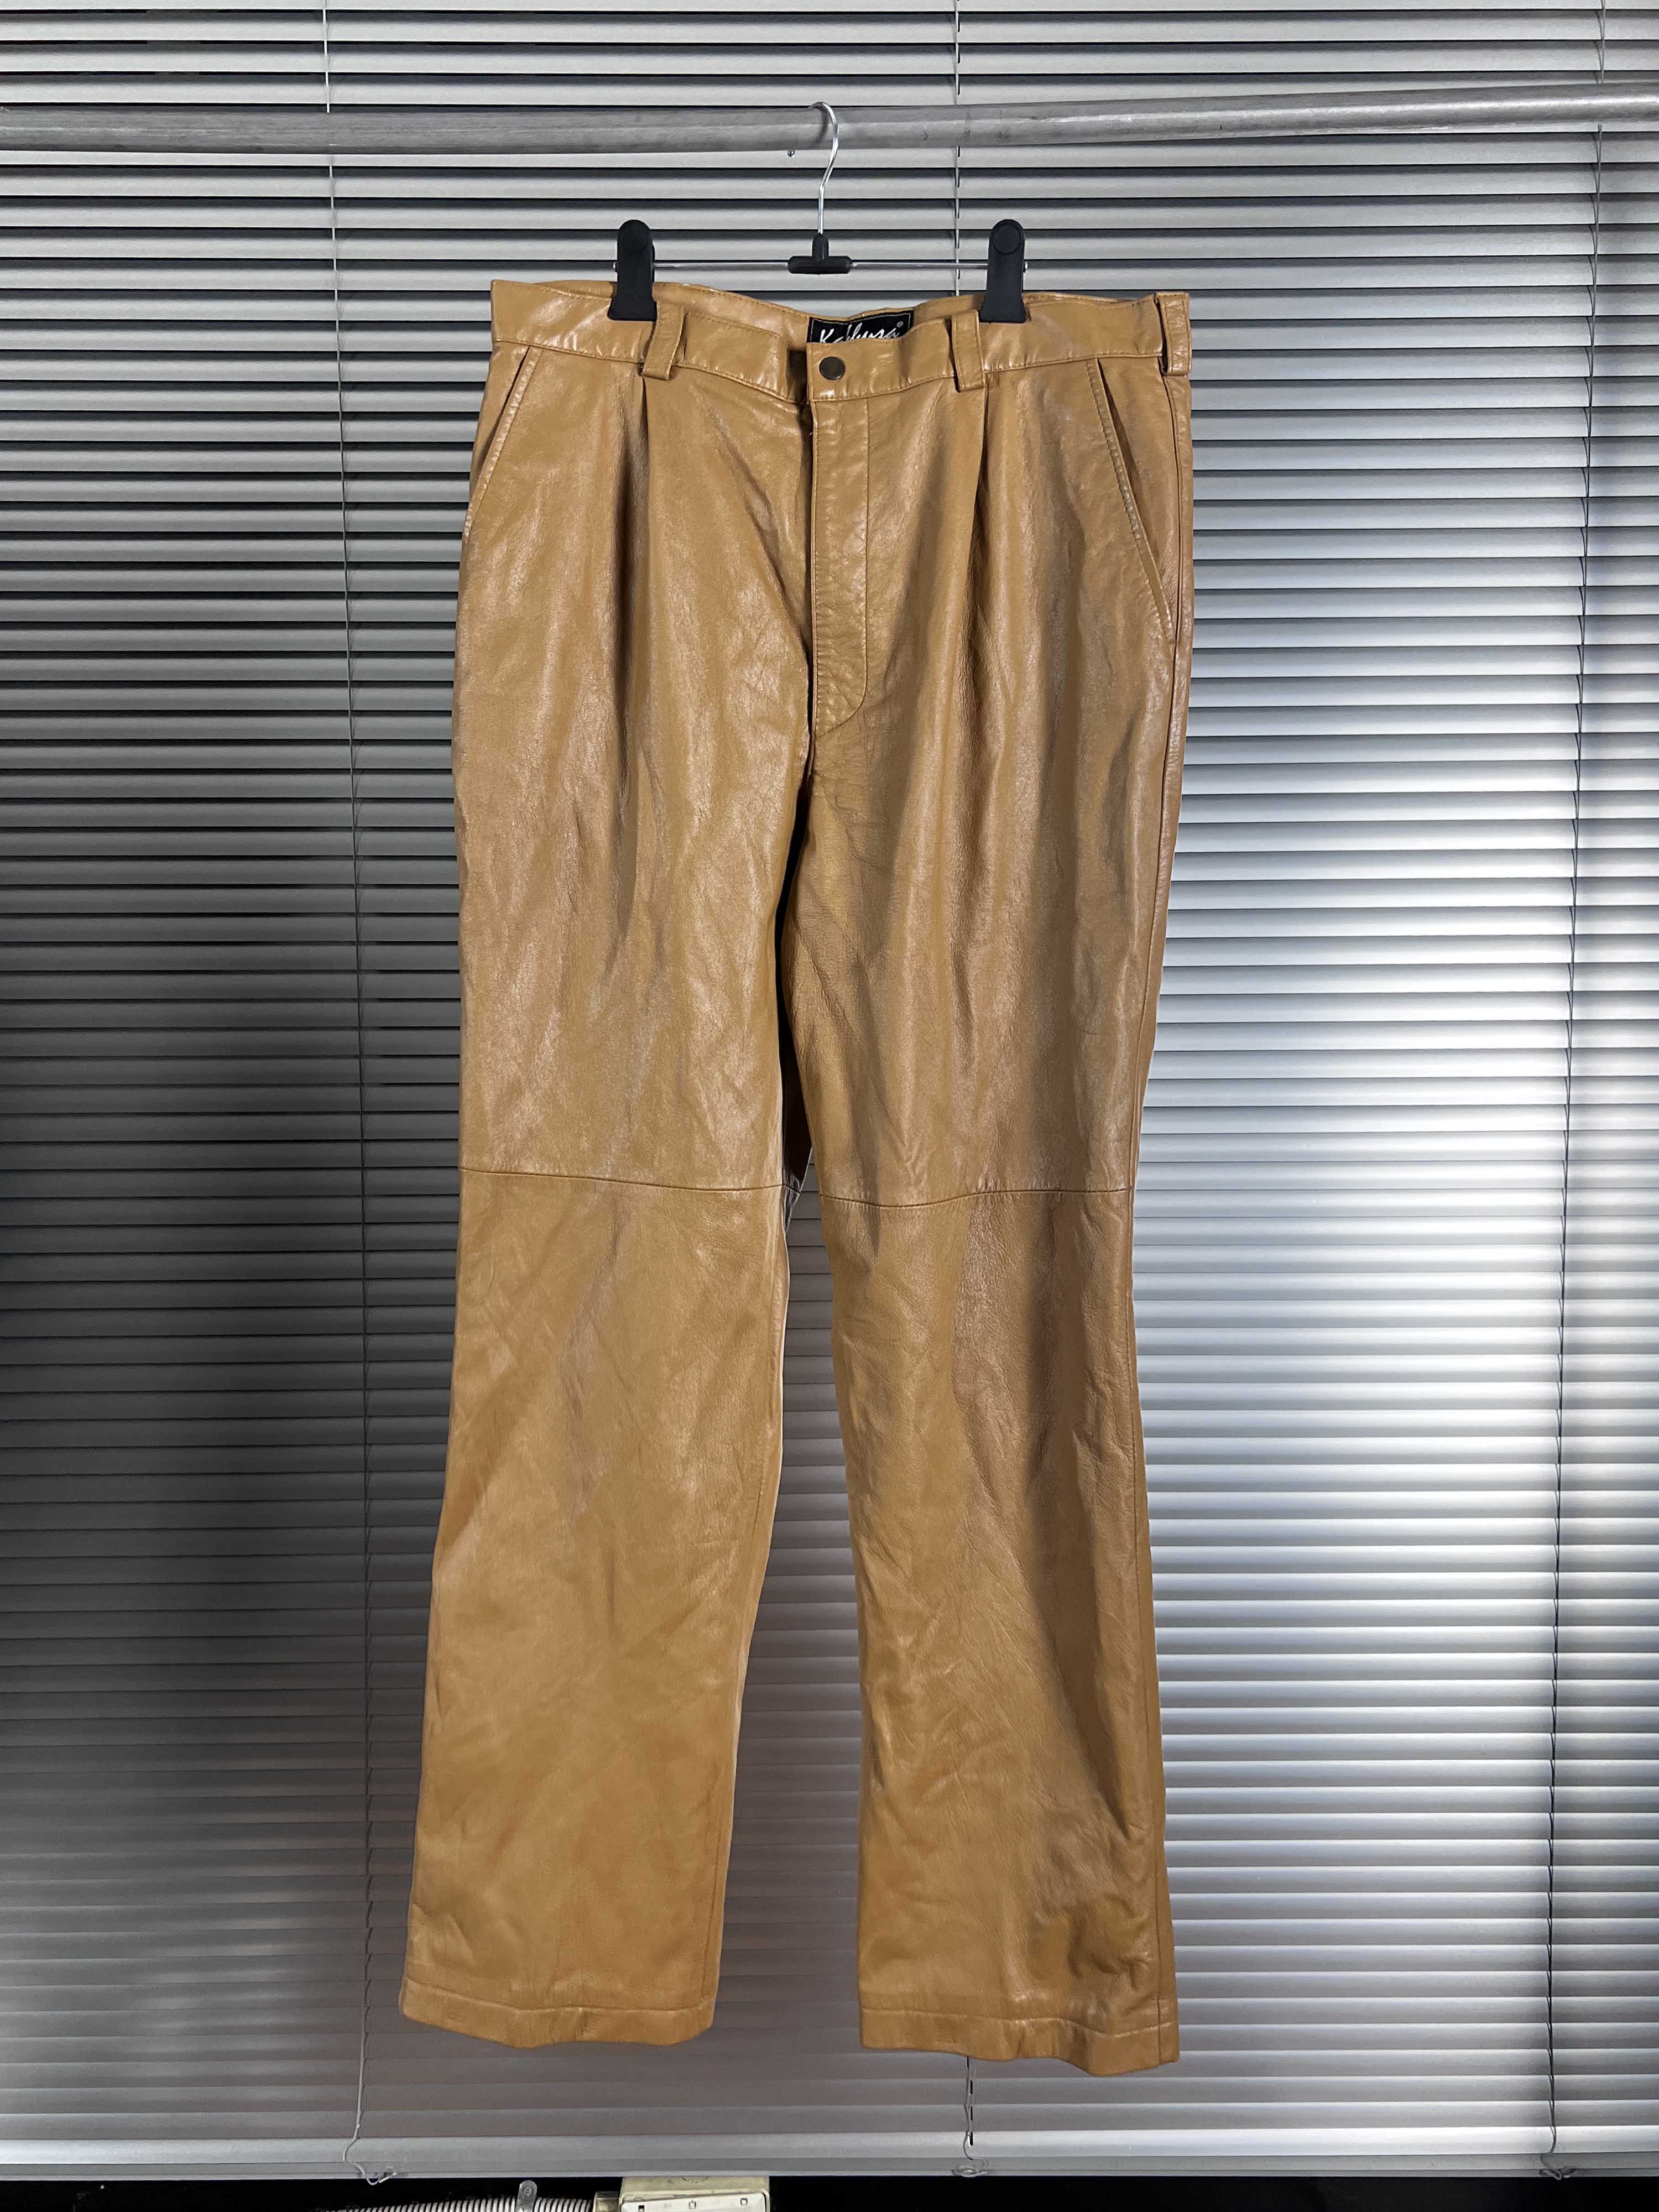 beige leather pants